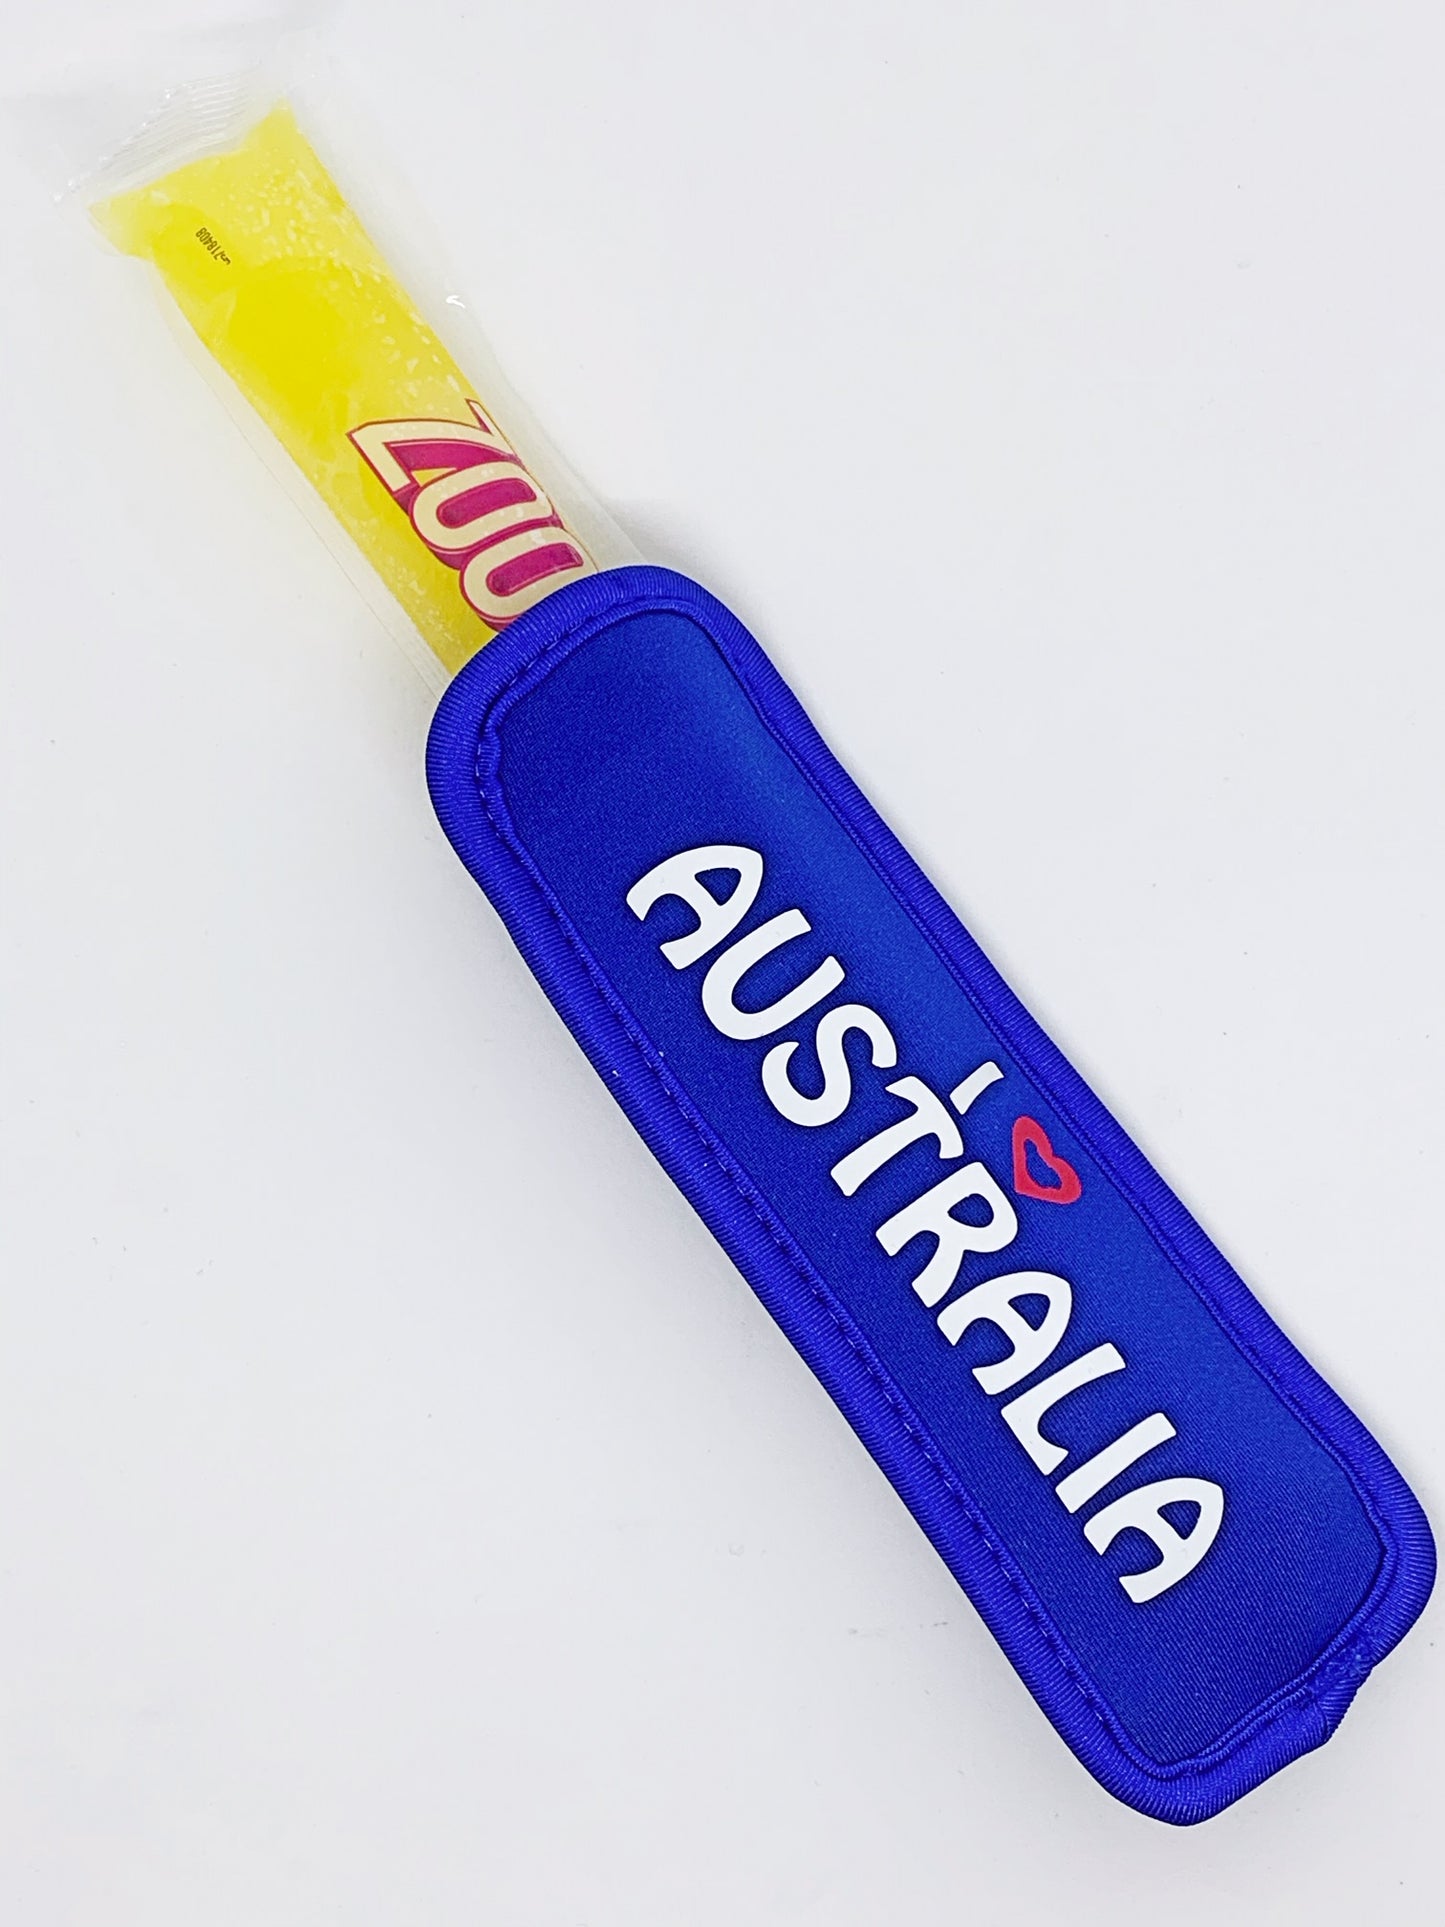 Aussie Icy Pole Holders